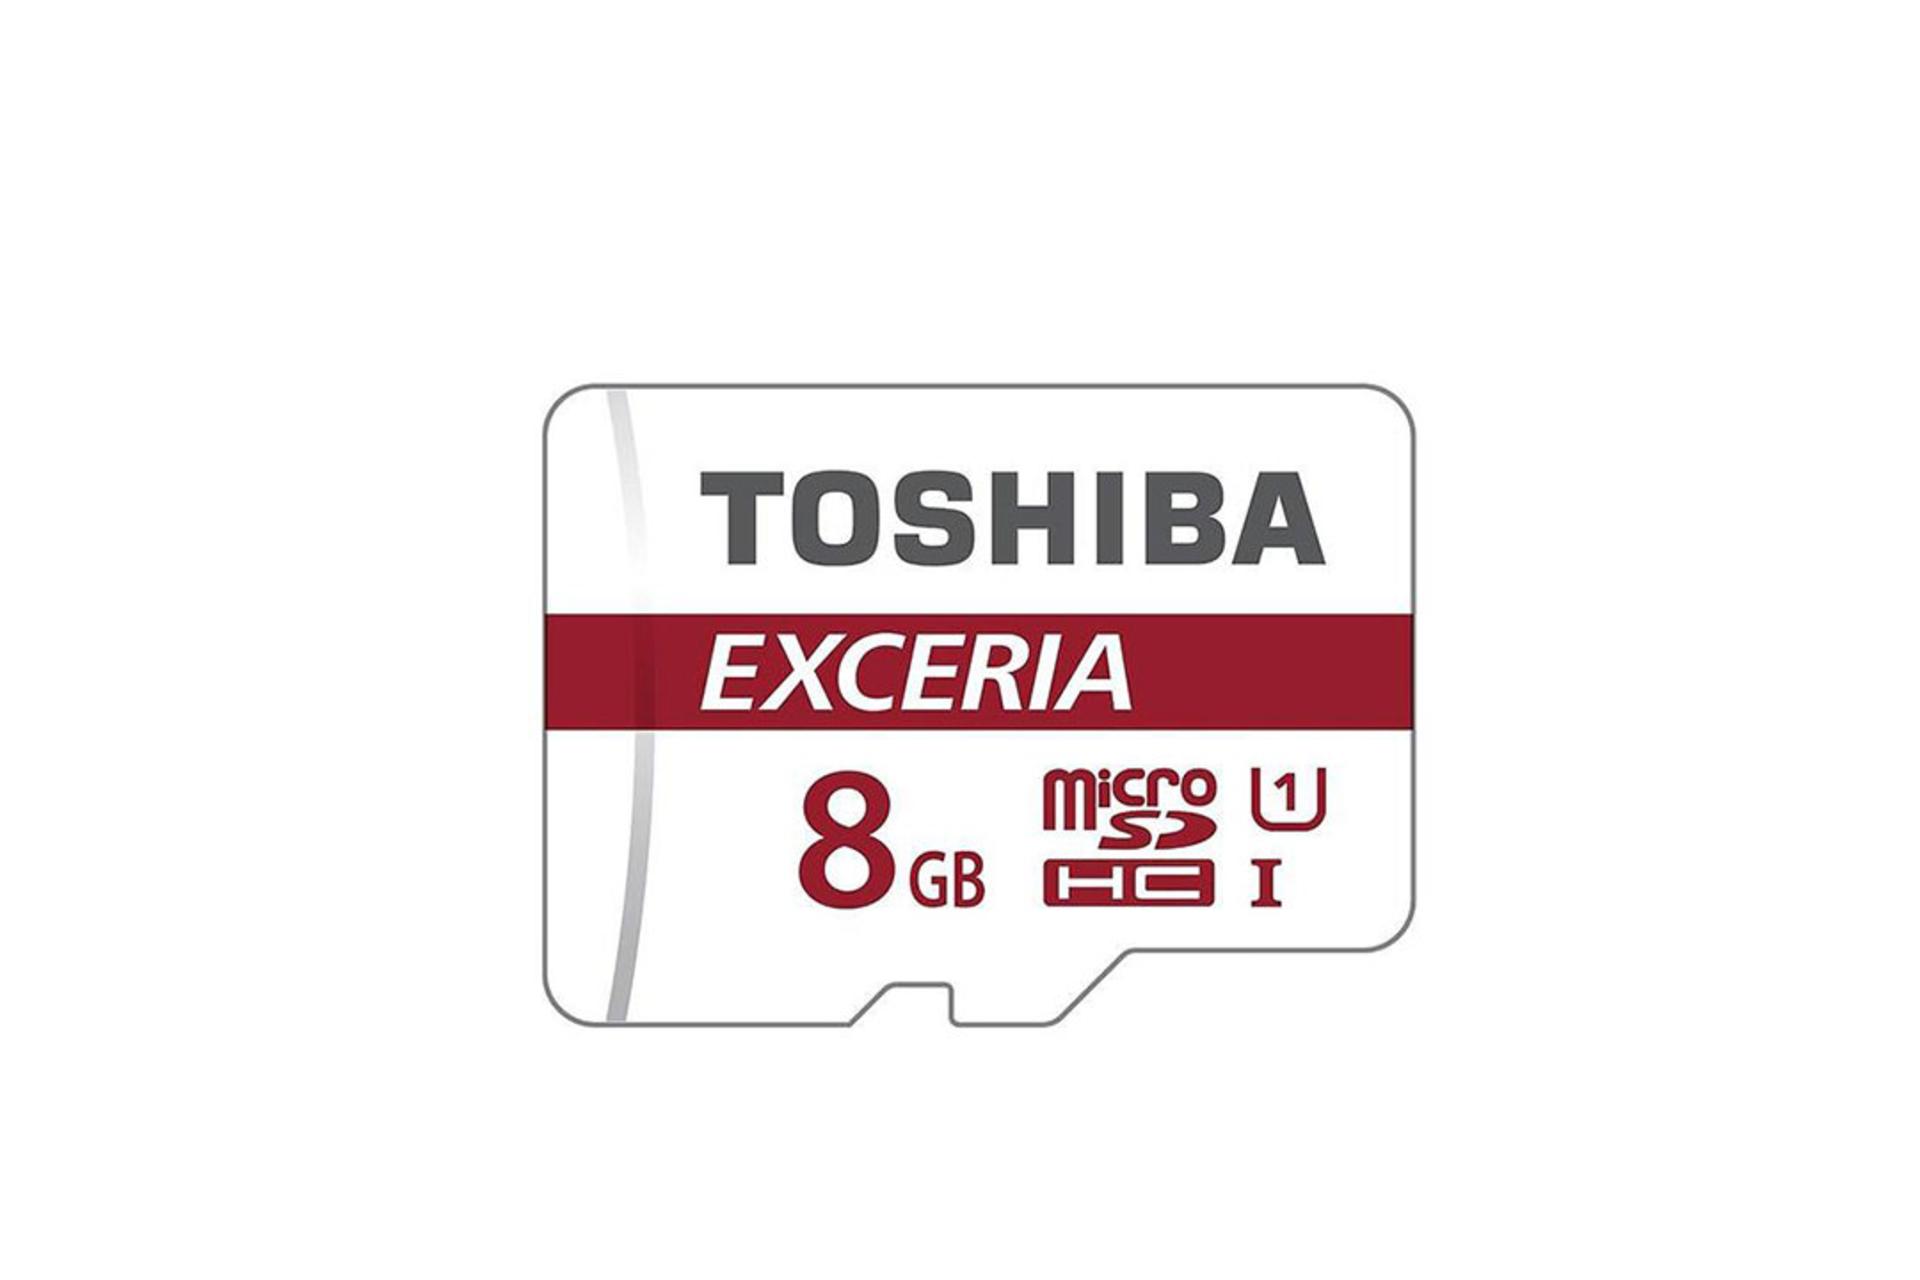 Toshiba Exceria M301-EA mcriSDHC Class 10 UHS-I U1 8GB